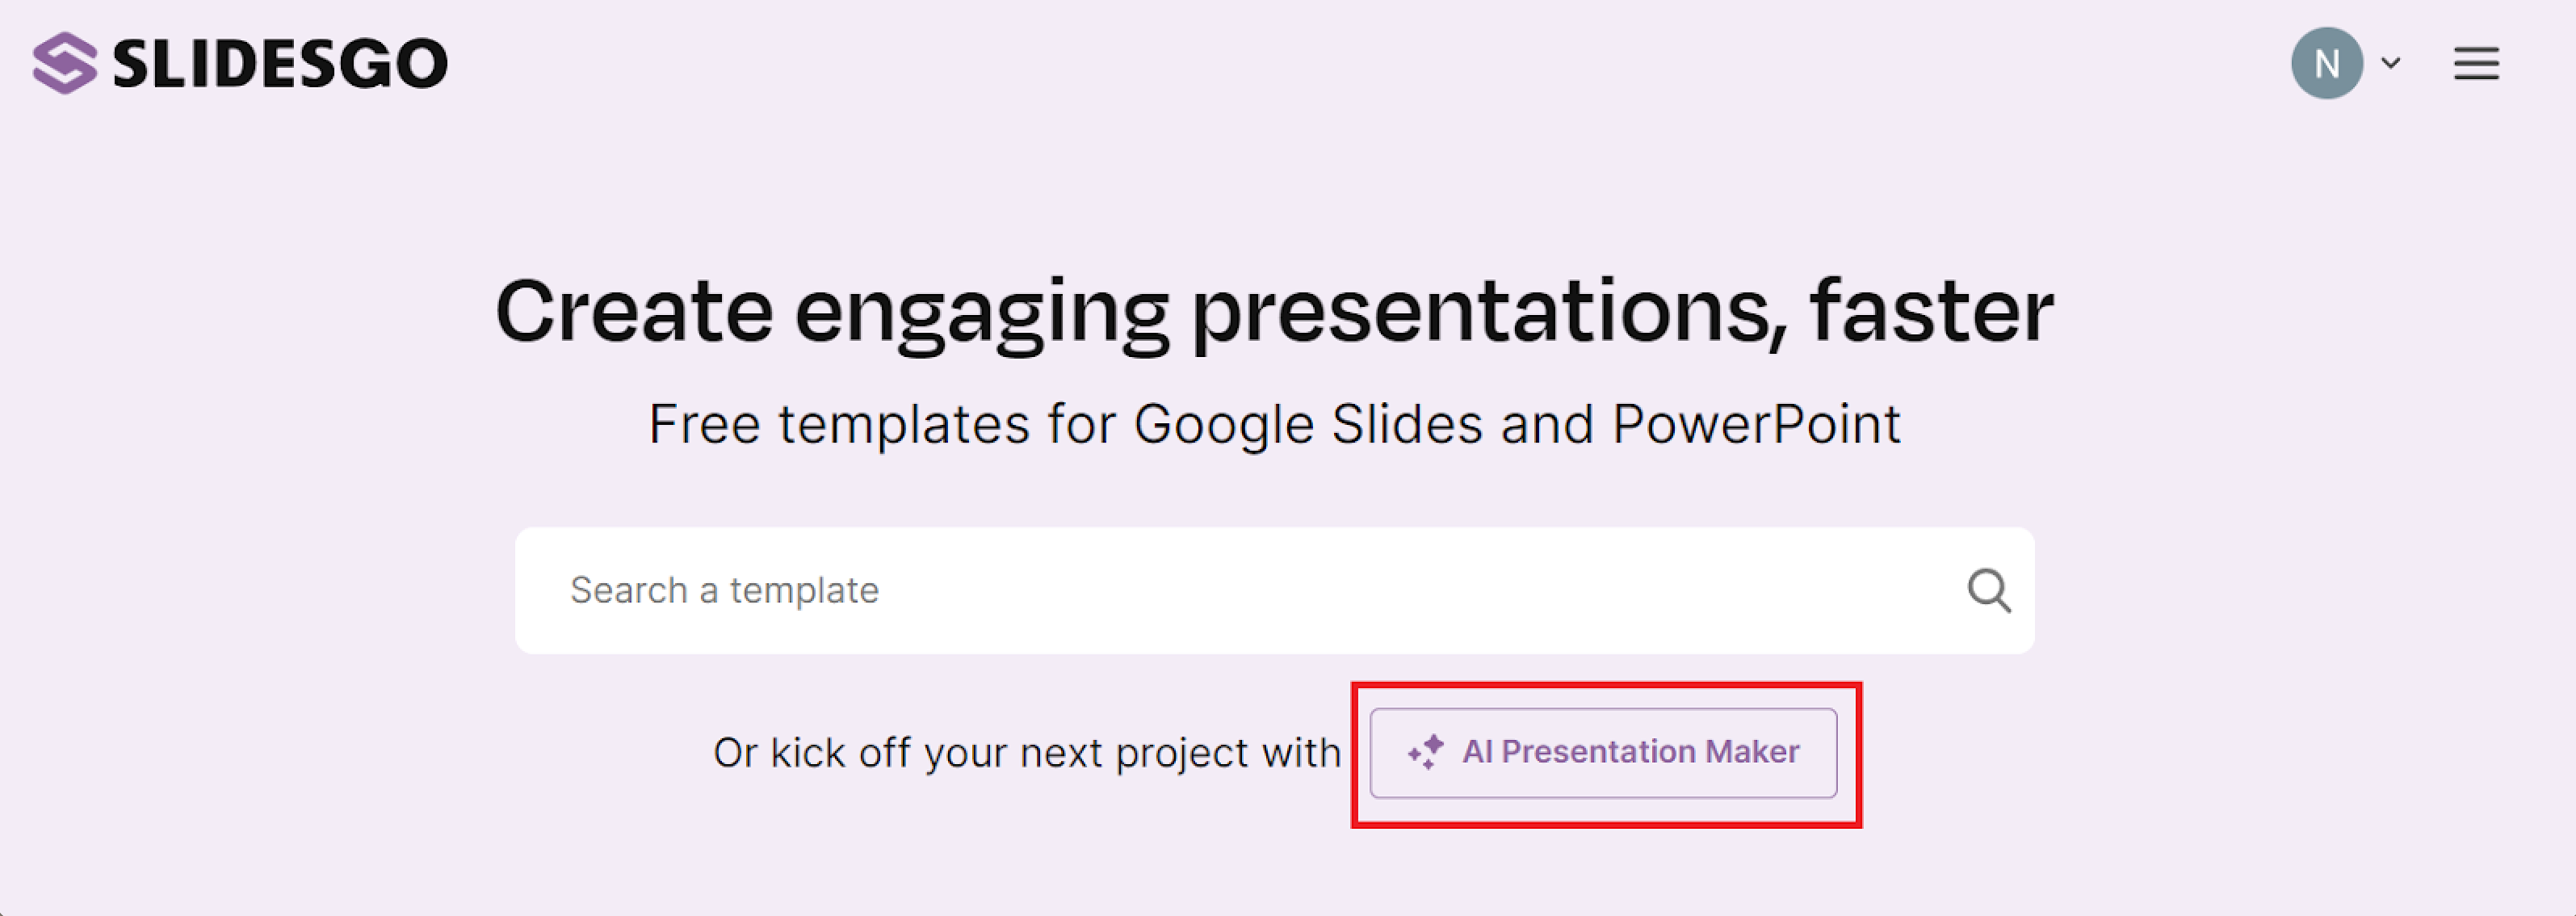 slidesgo ai presentation generator